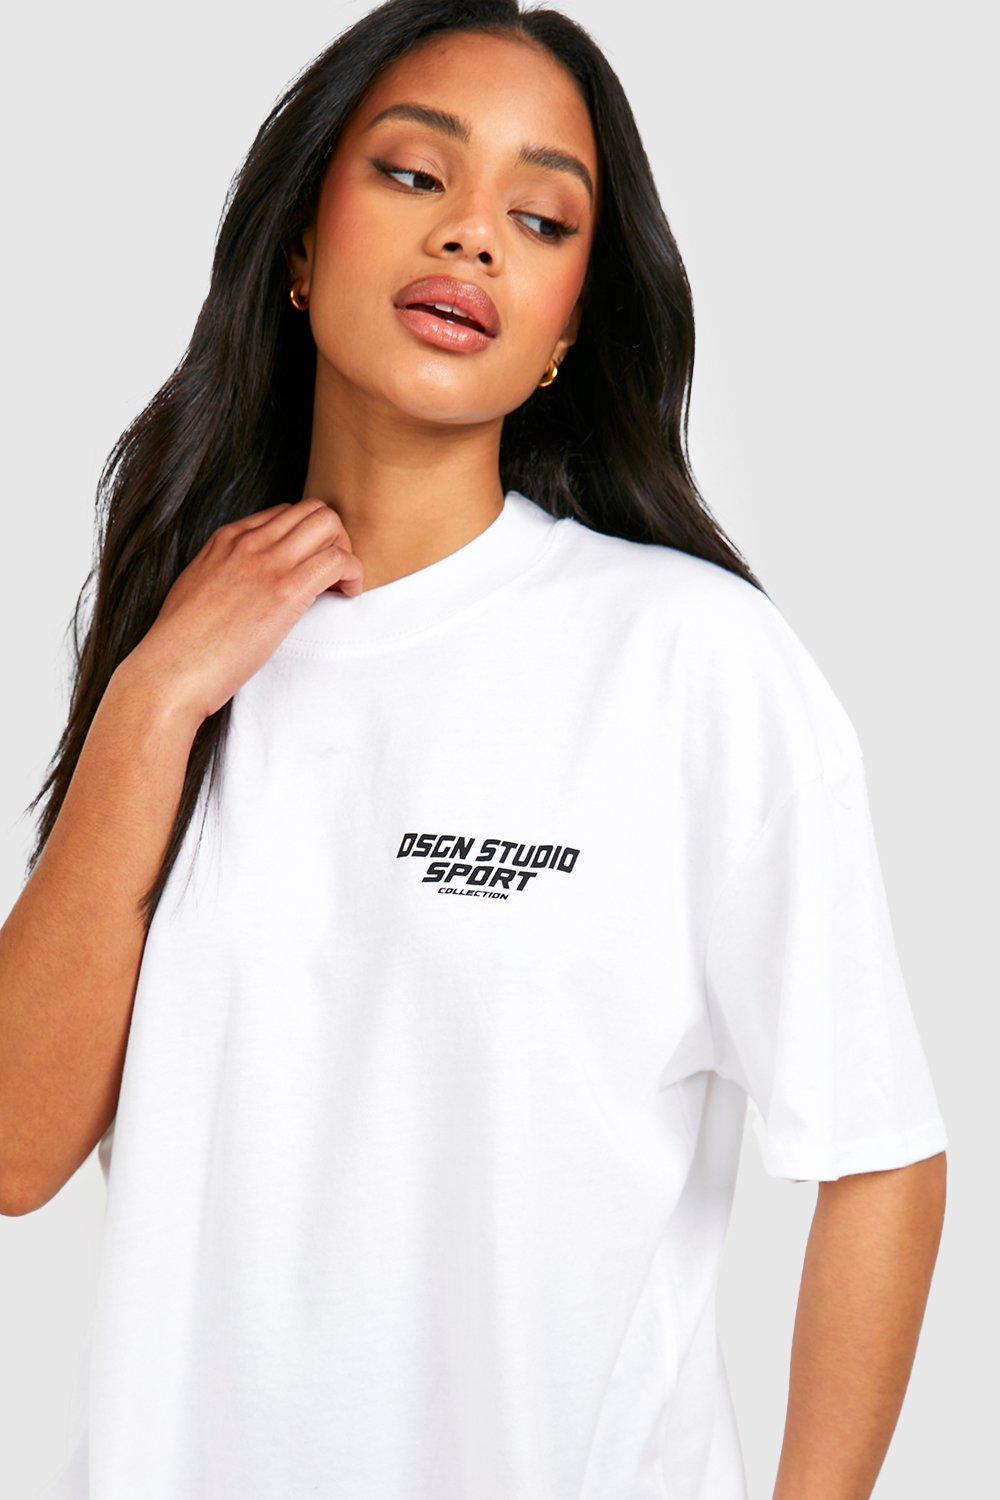 Dsgn Studio Sport Collection Oversized Slogan boohoo T-Shirt 